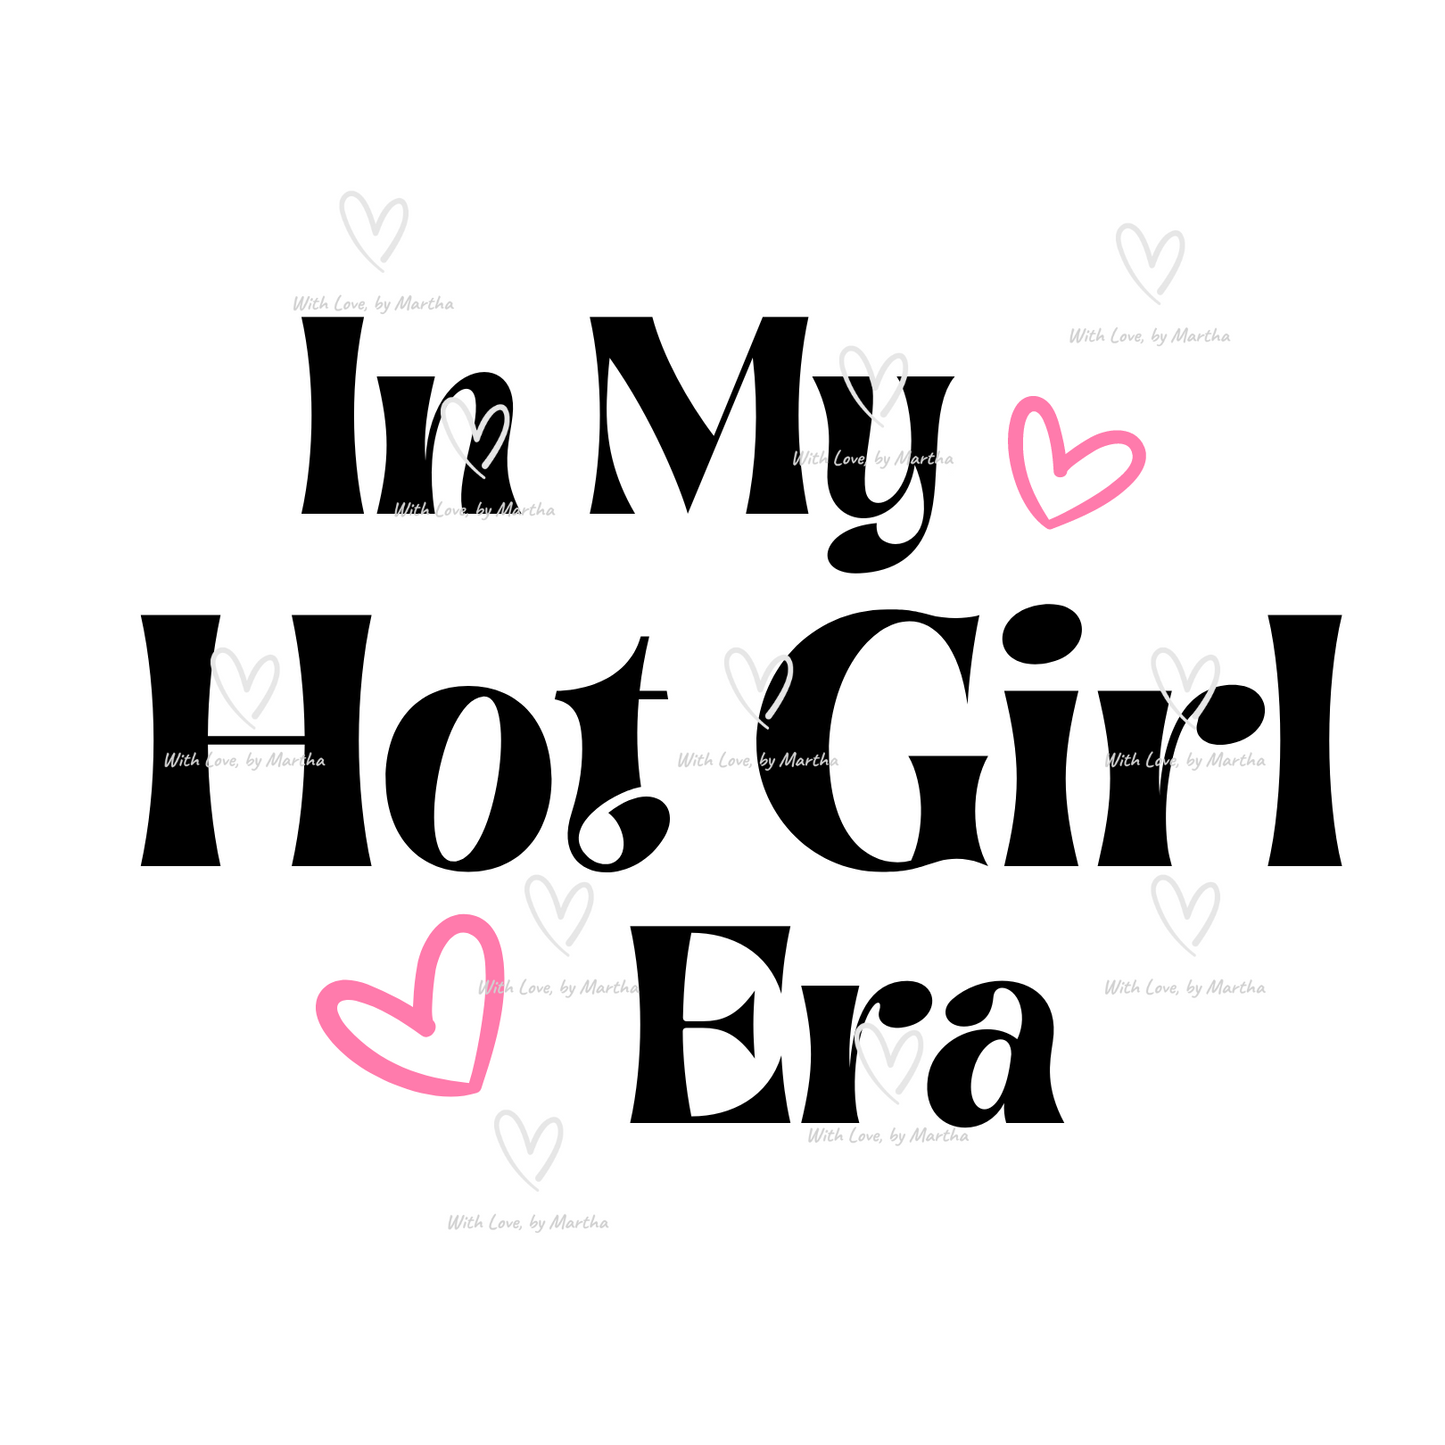 In my Hot Girl Era PNG & SVG- Digital Download